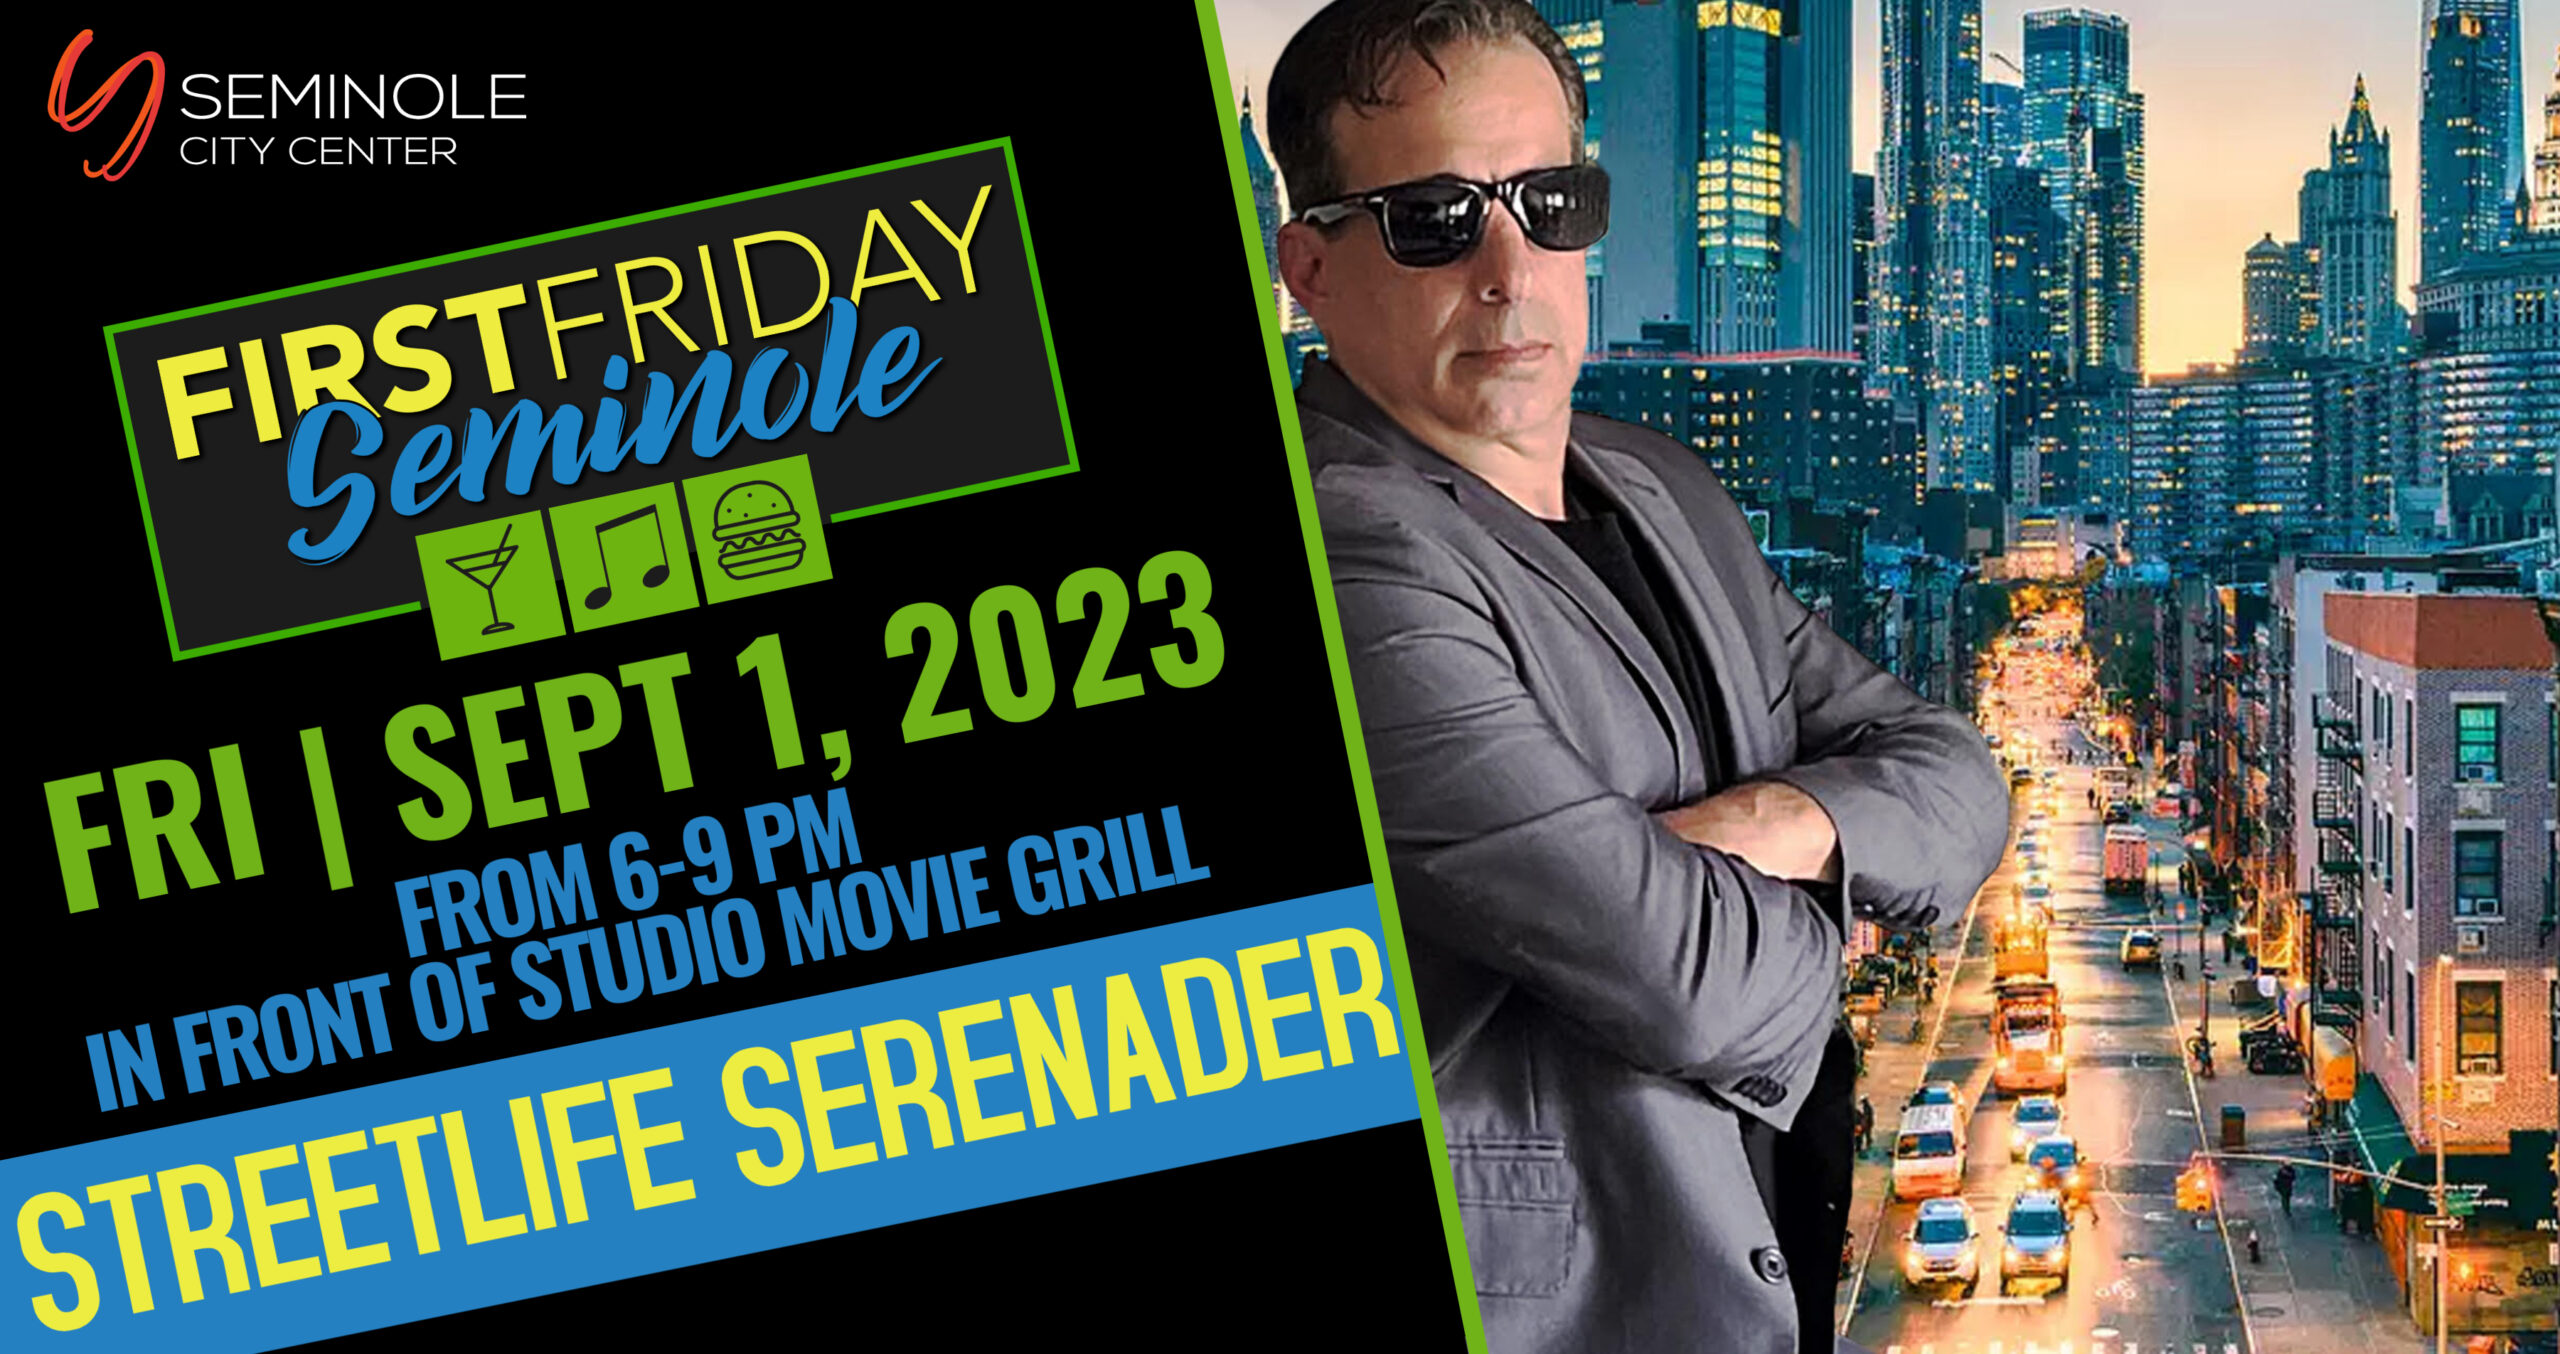 First Friday Seminole Streetlife Serenader A Tribute to Billy Joel